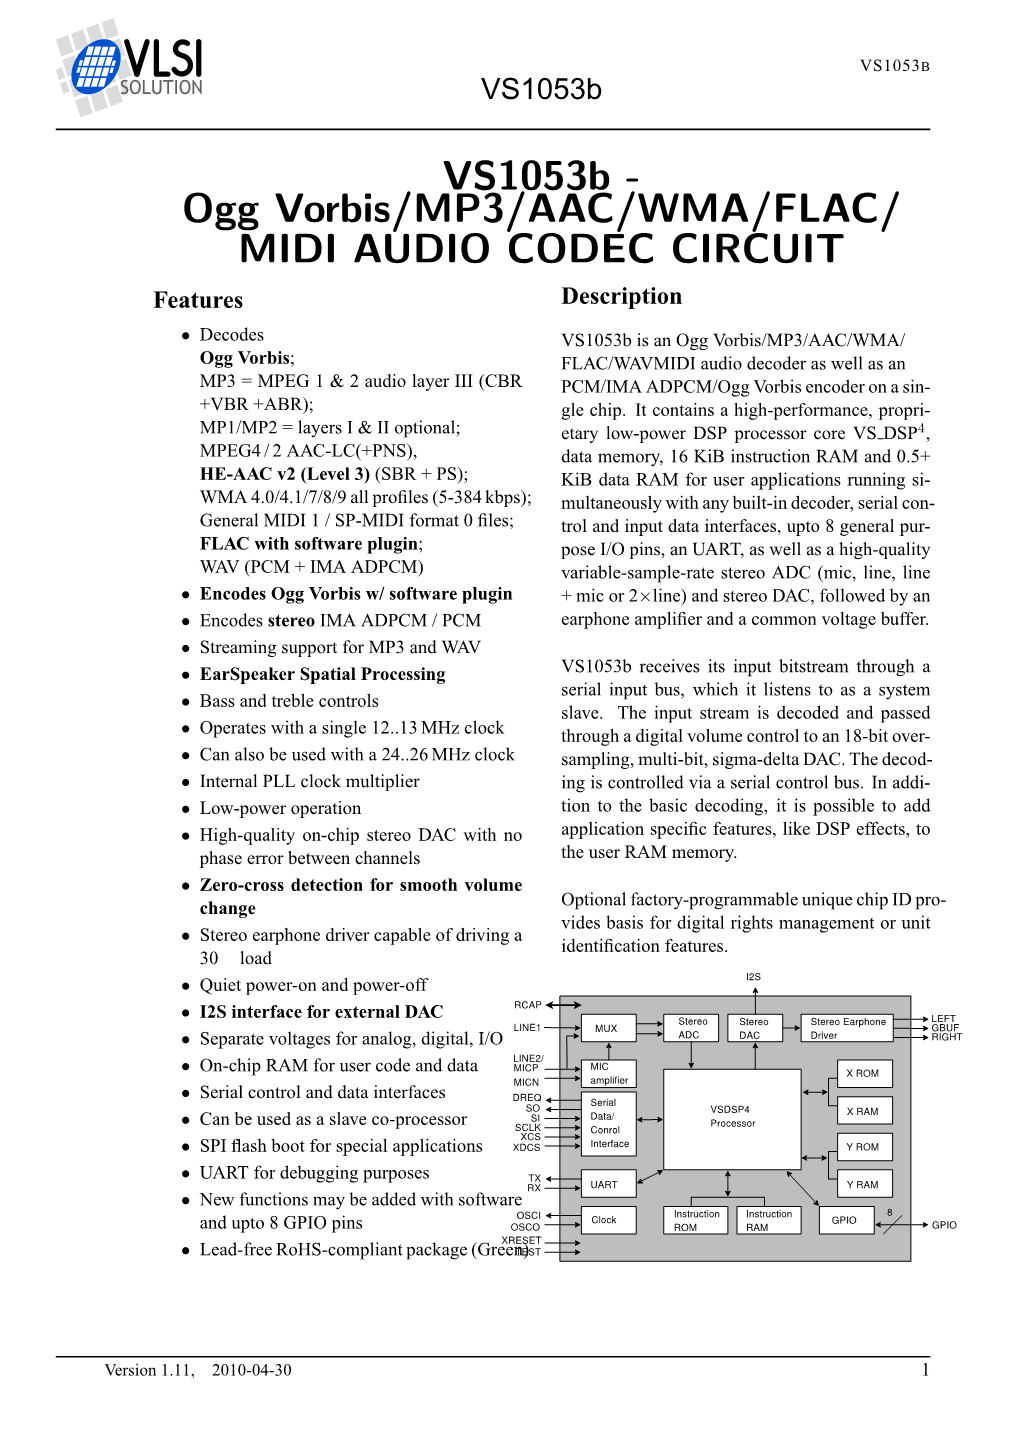 Ogg Vorbis/MP3/AAC/WMA/FLAC/ MIDI AUDIO CODEC CIRCUIT